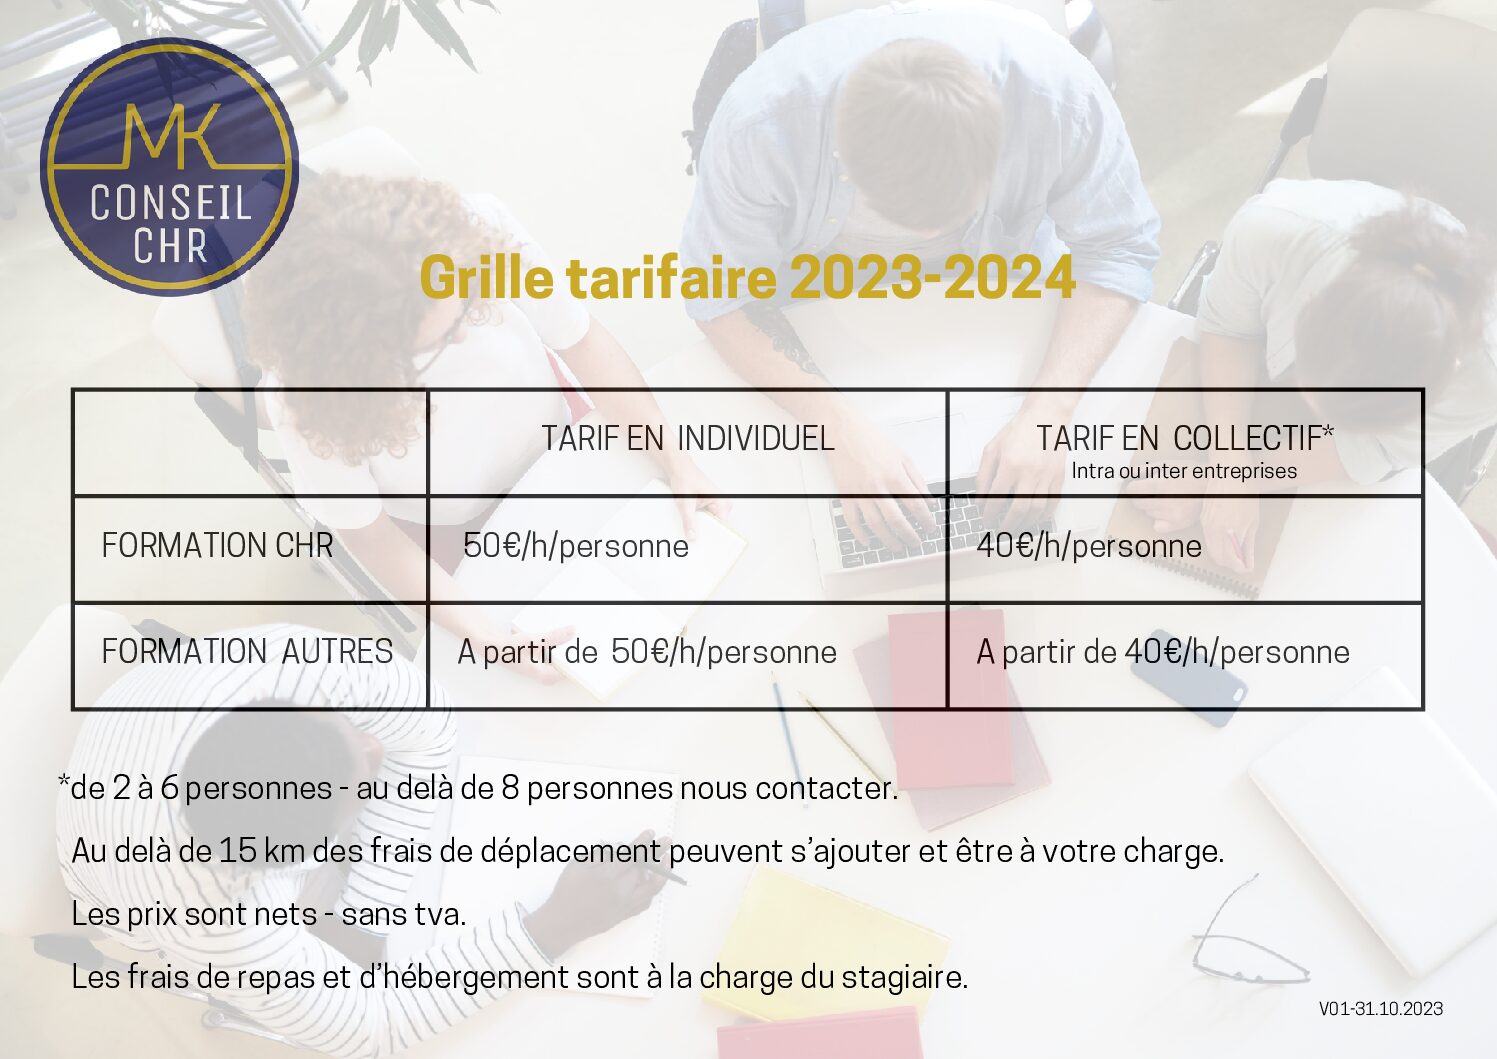 grille-tarifaire-2023-2024-mkconseil